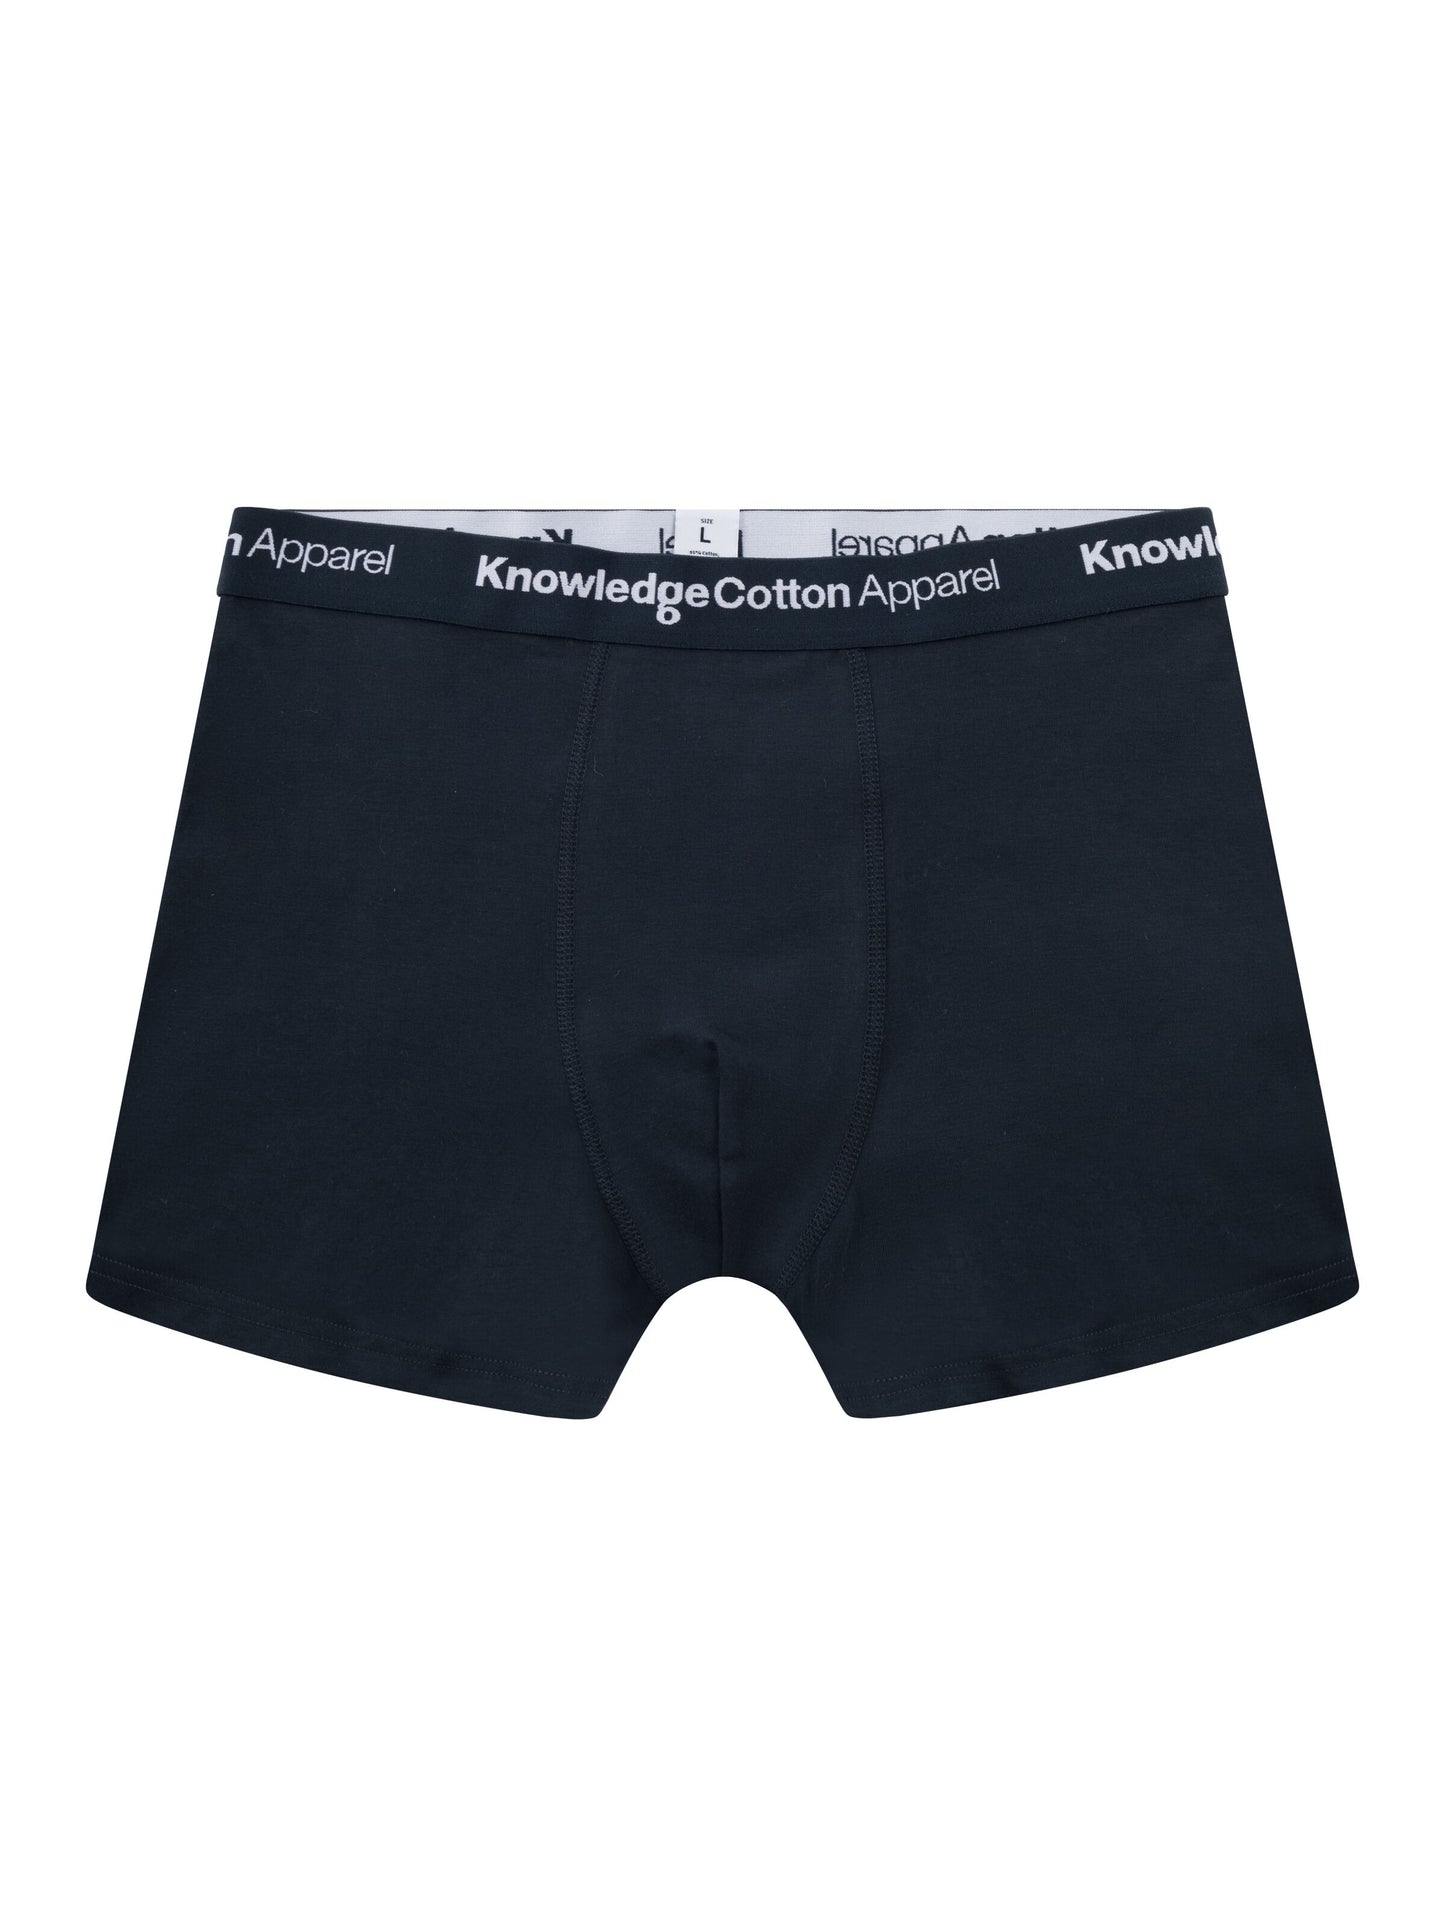 KCA - 2 pack underwear - Vegan Campanula